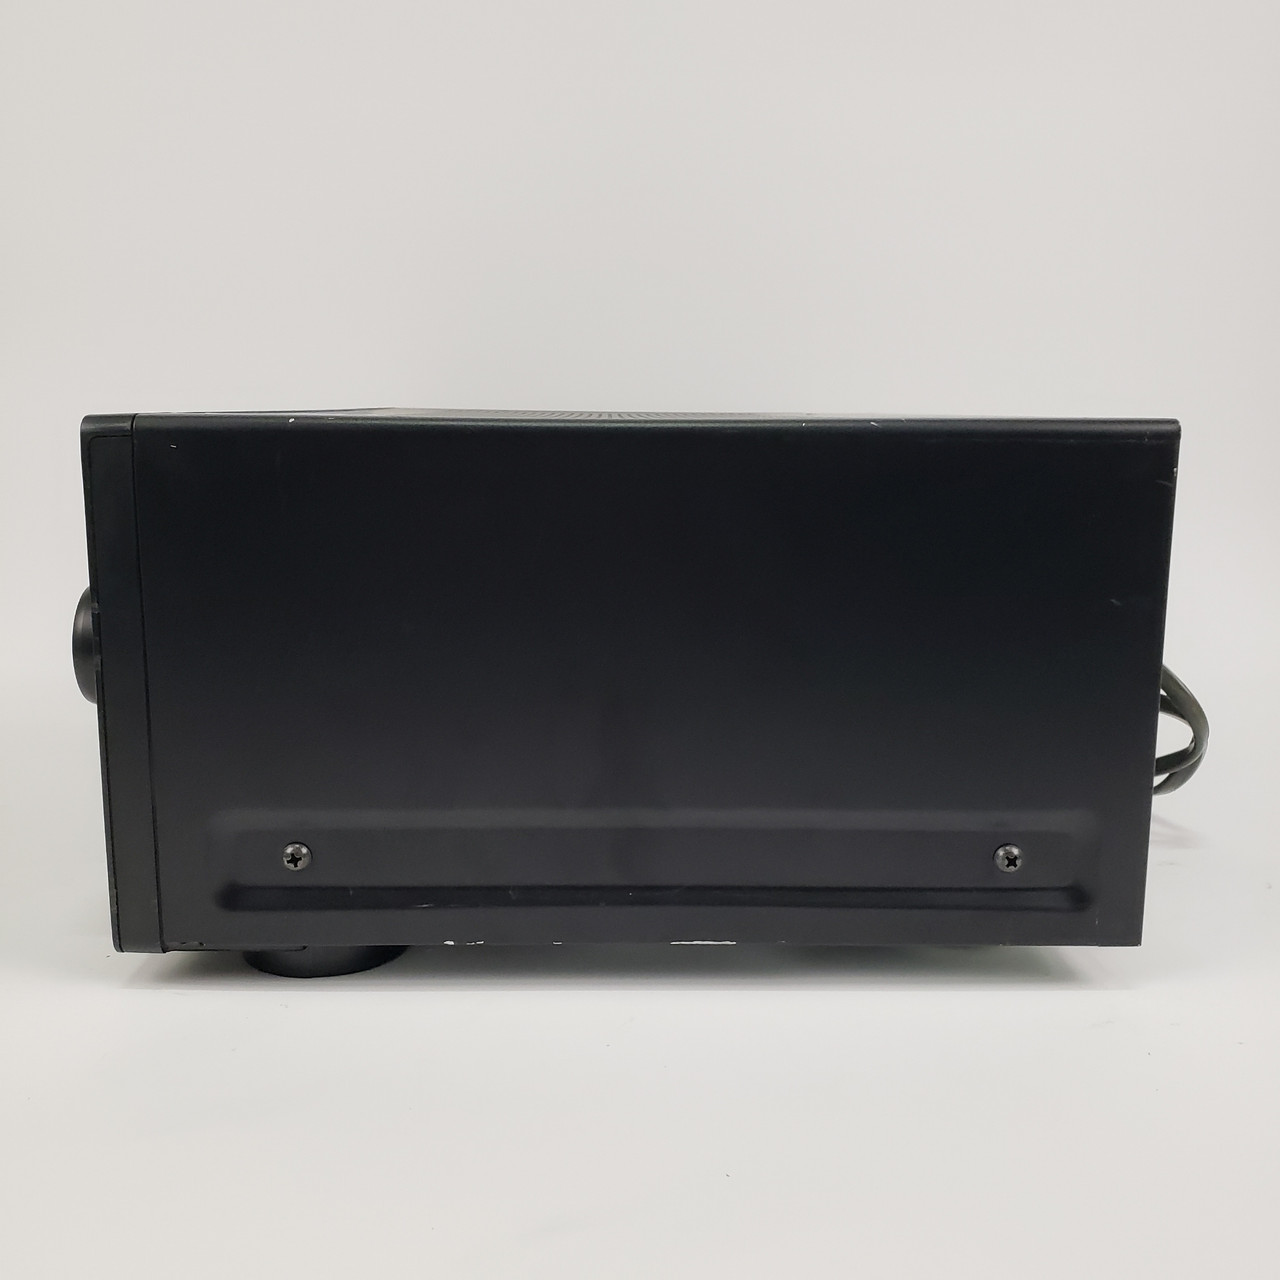 Sony STR-DG720 AV Receiver | Grade C